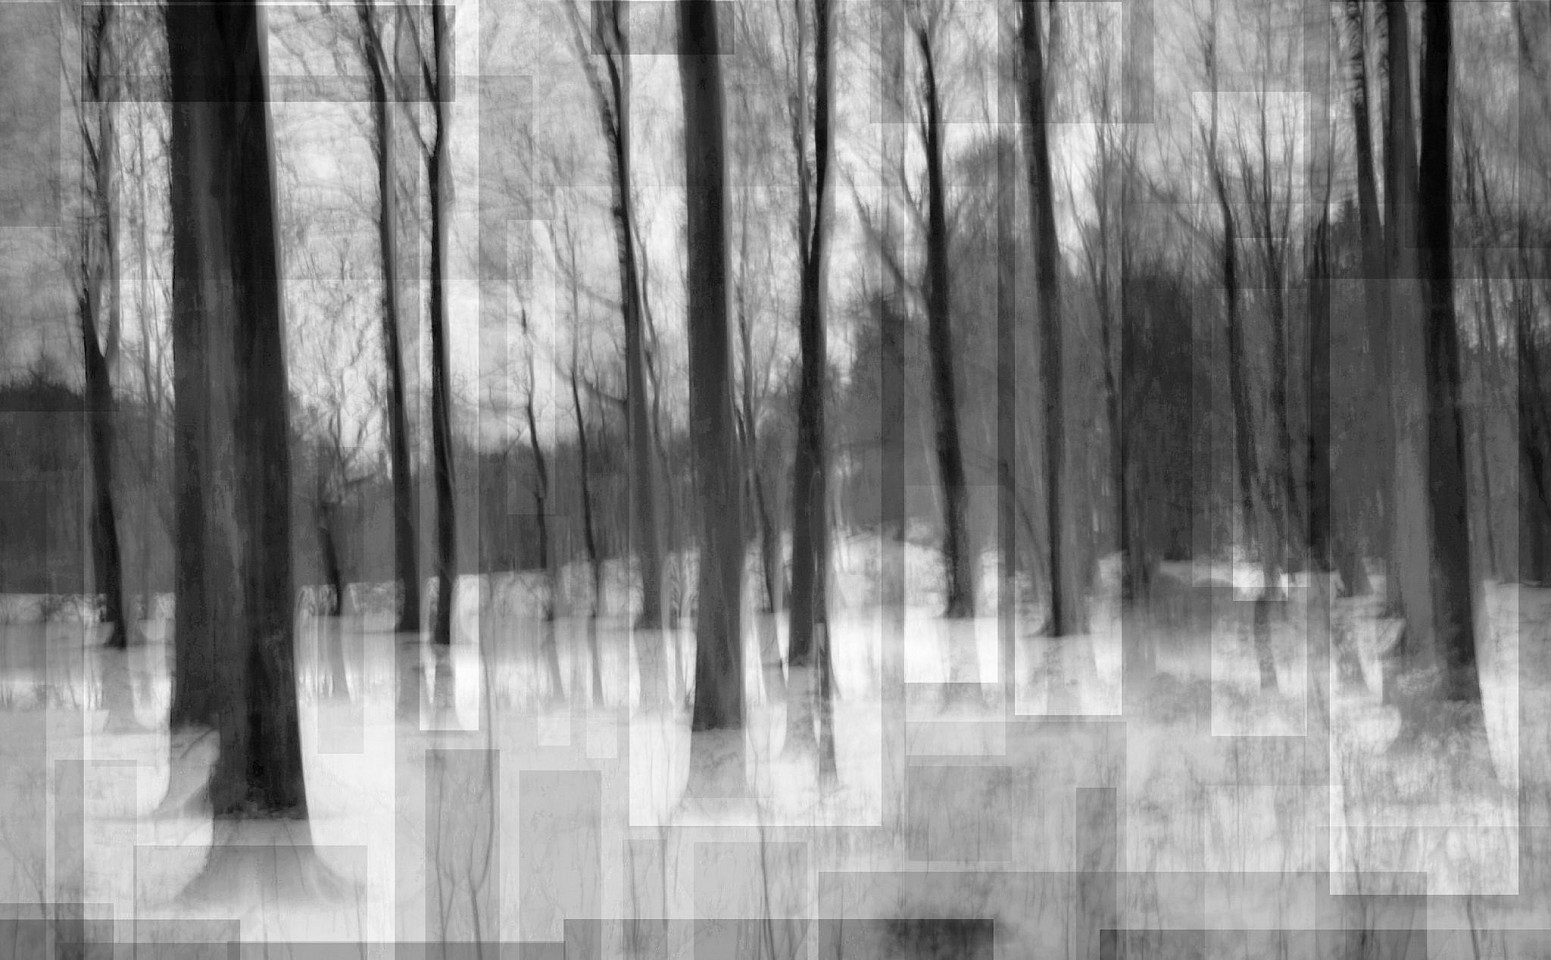 LUIS PAREDES, Forestal Choir, 2011
photo impression on canvas, 23 5/8 x 38 1/4 in. (60 x 97 cm)
ed: 2/5
LP-C-0003